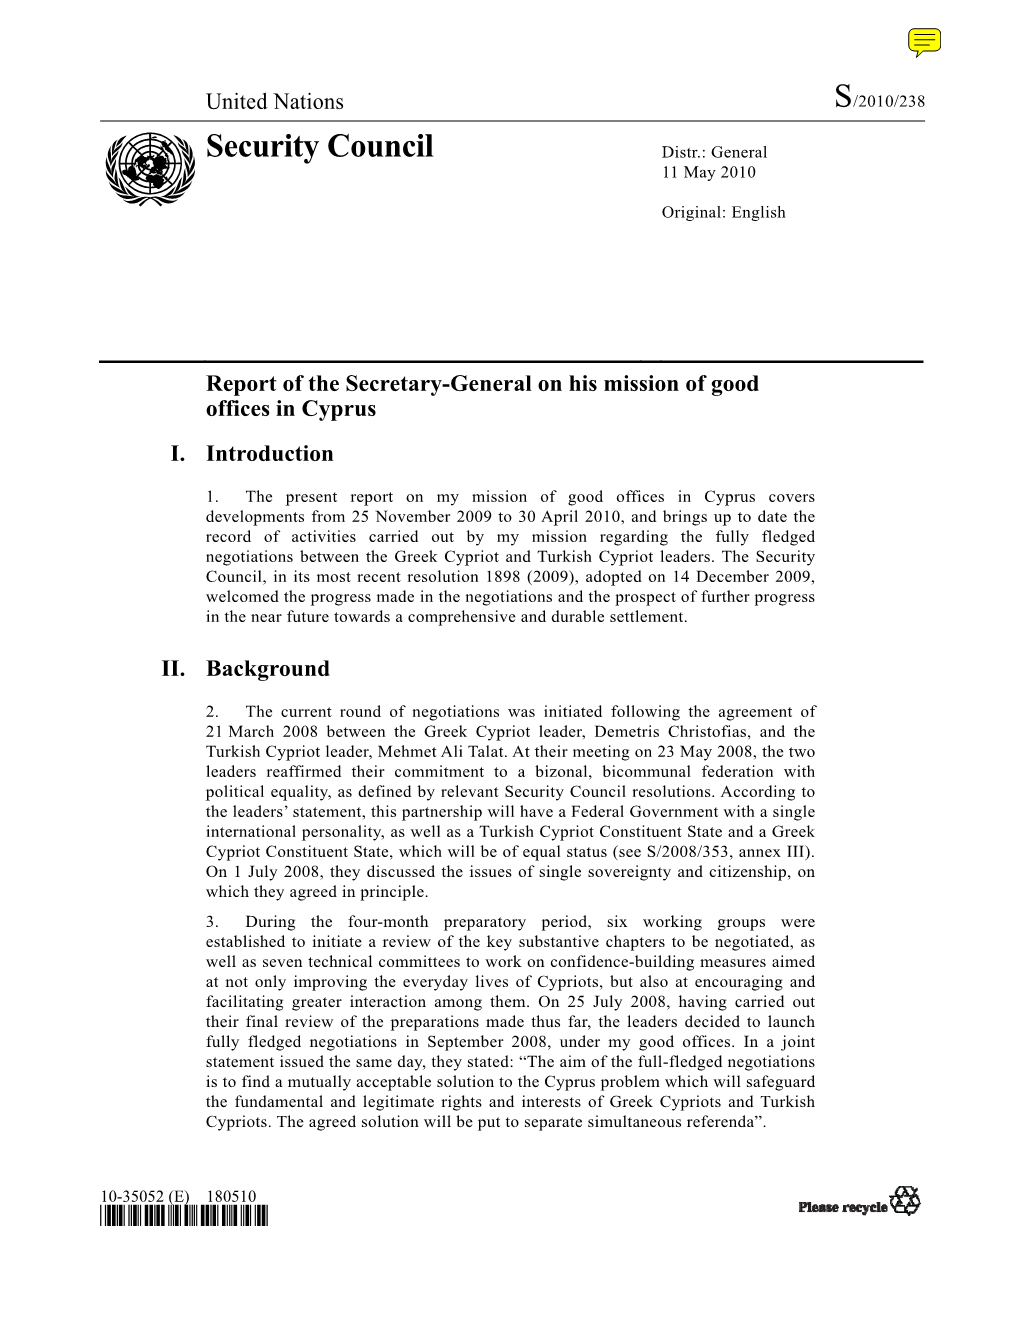 Security Council Distr.: General 11 May 2010